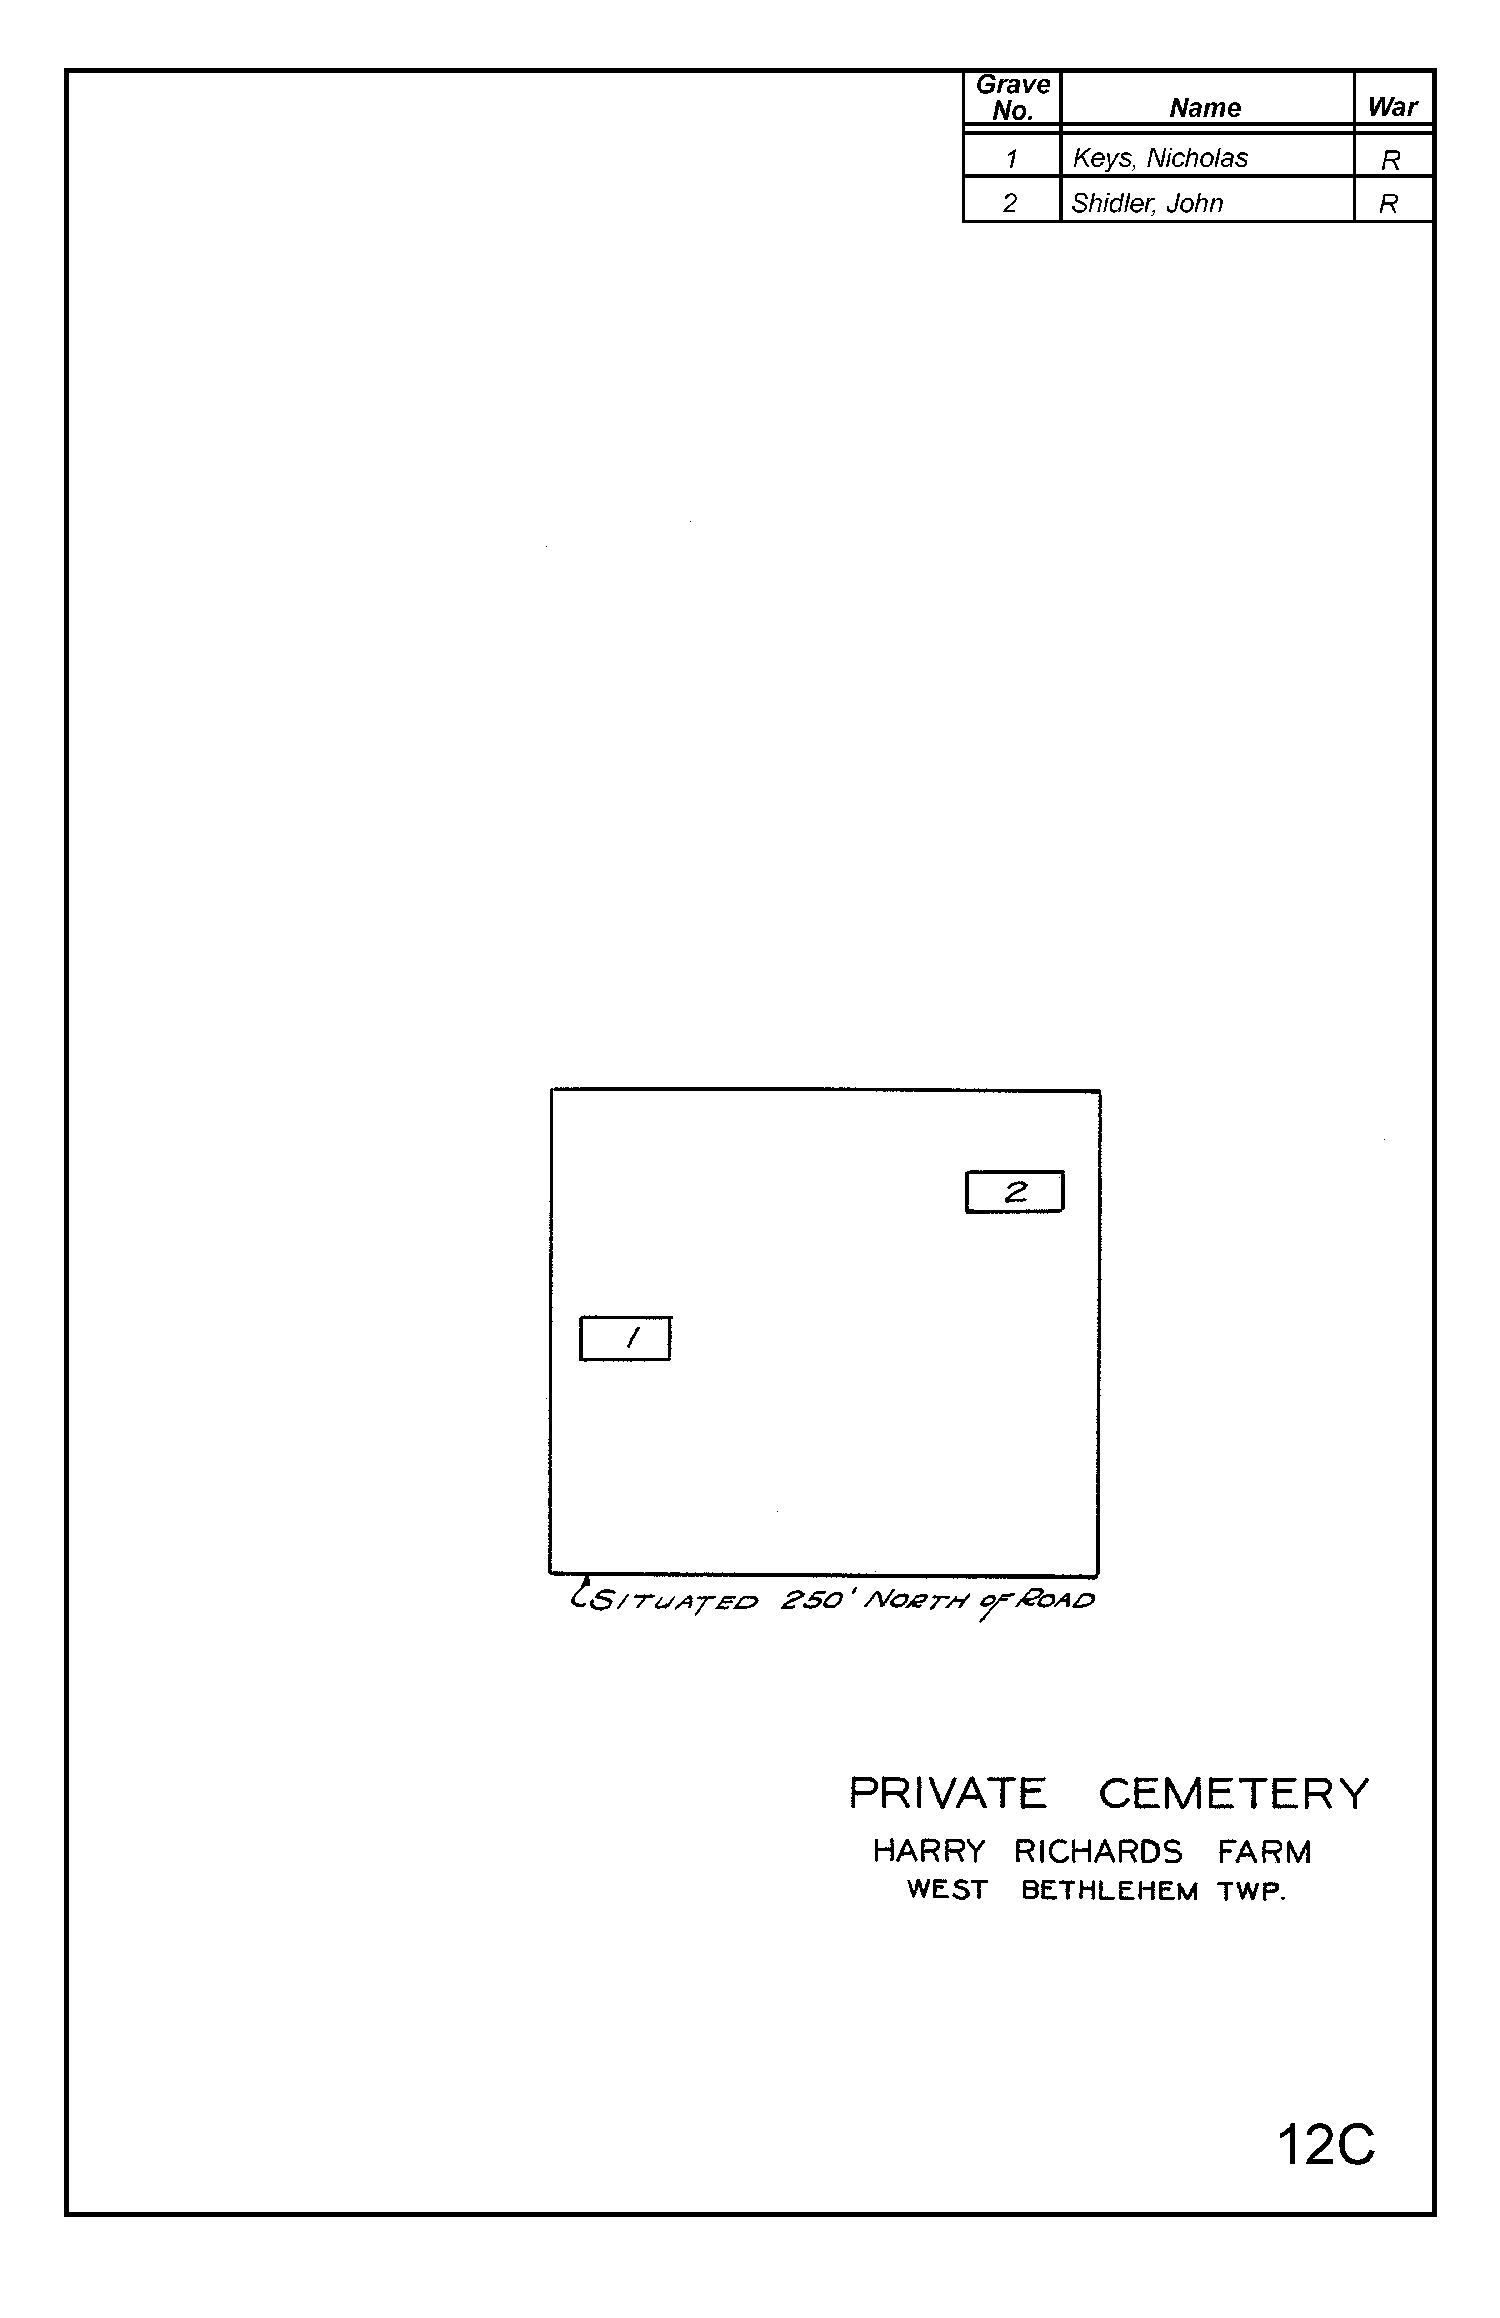 Private Cemetery Harry Richards Farm